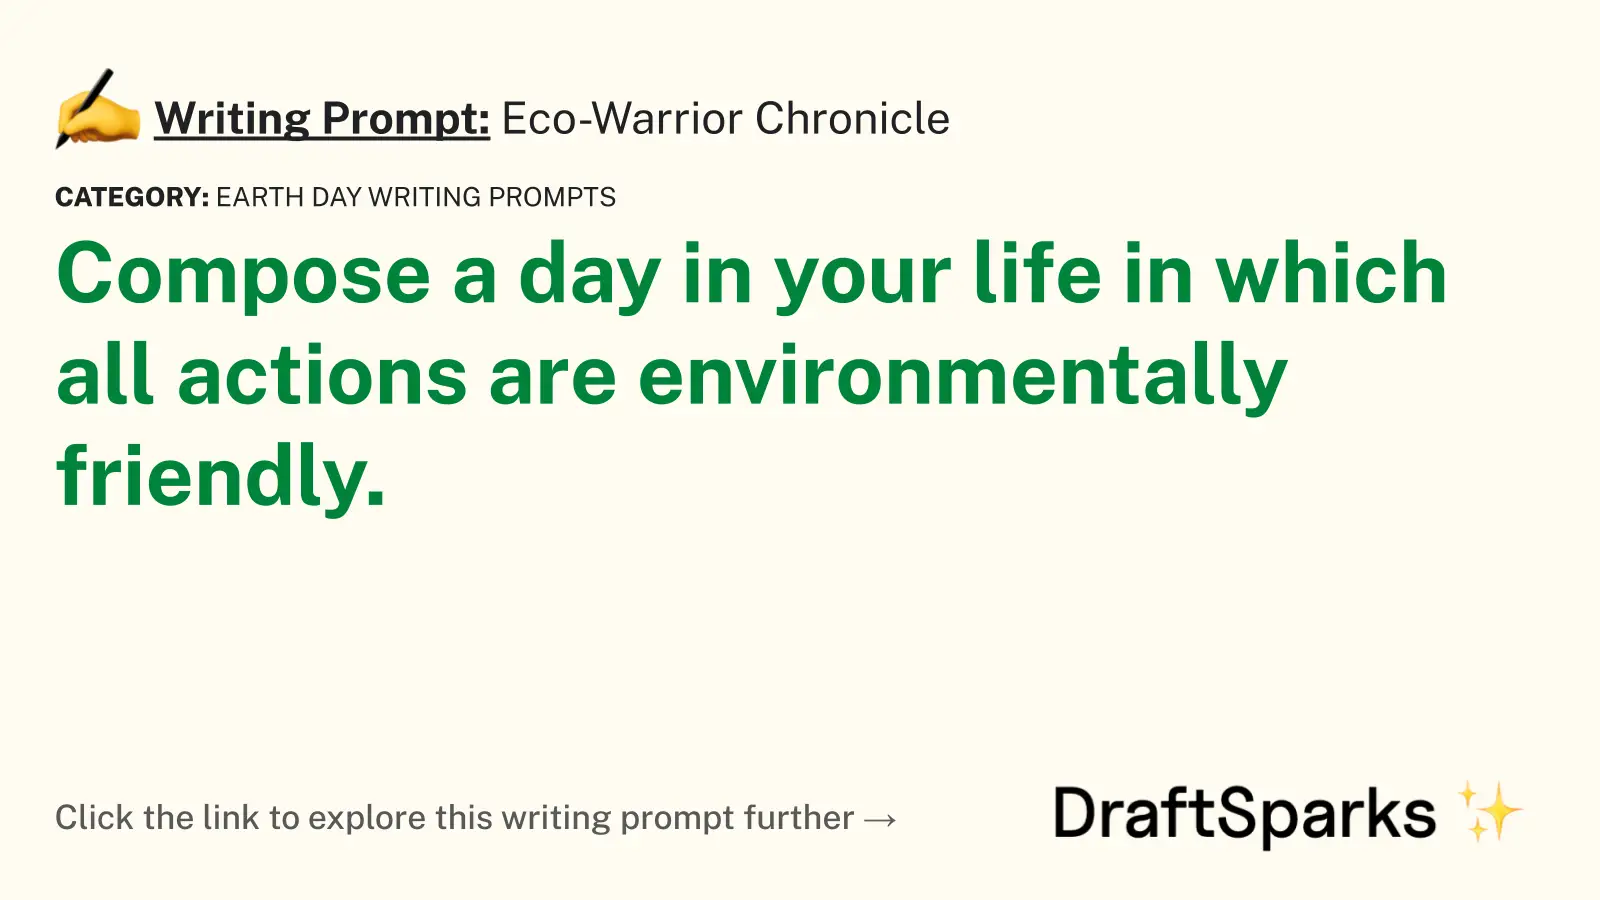 Eco-Warrior Chronicle